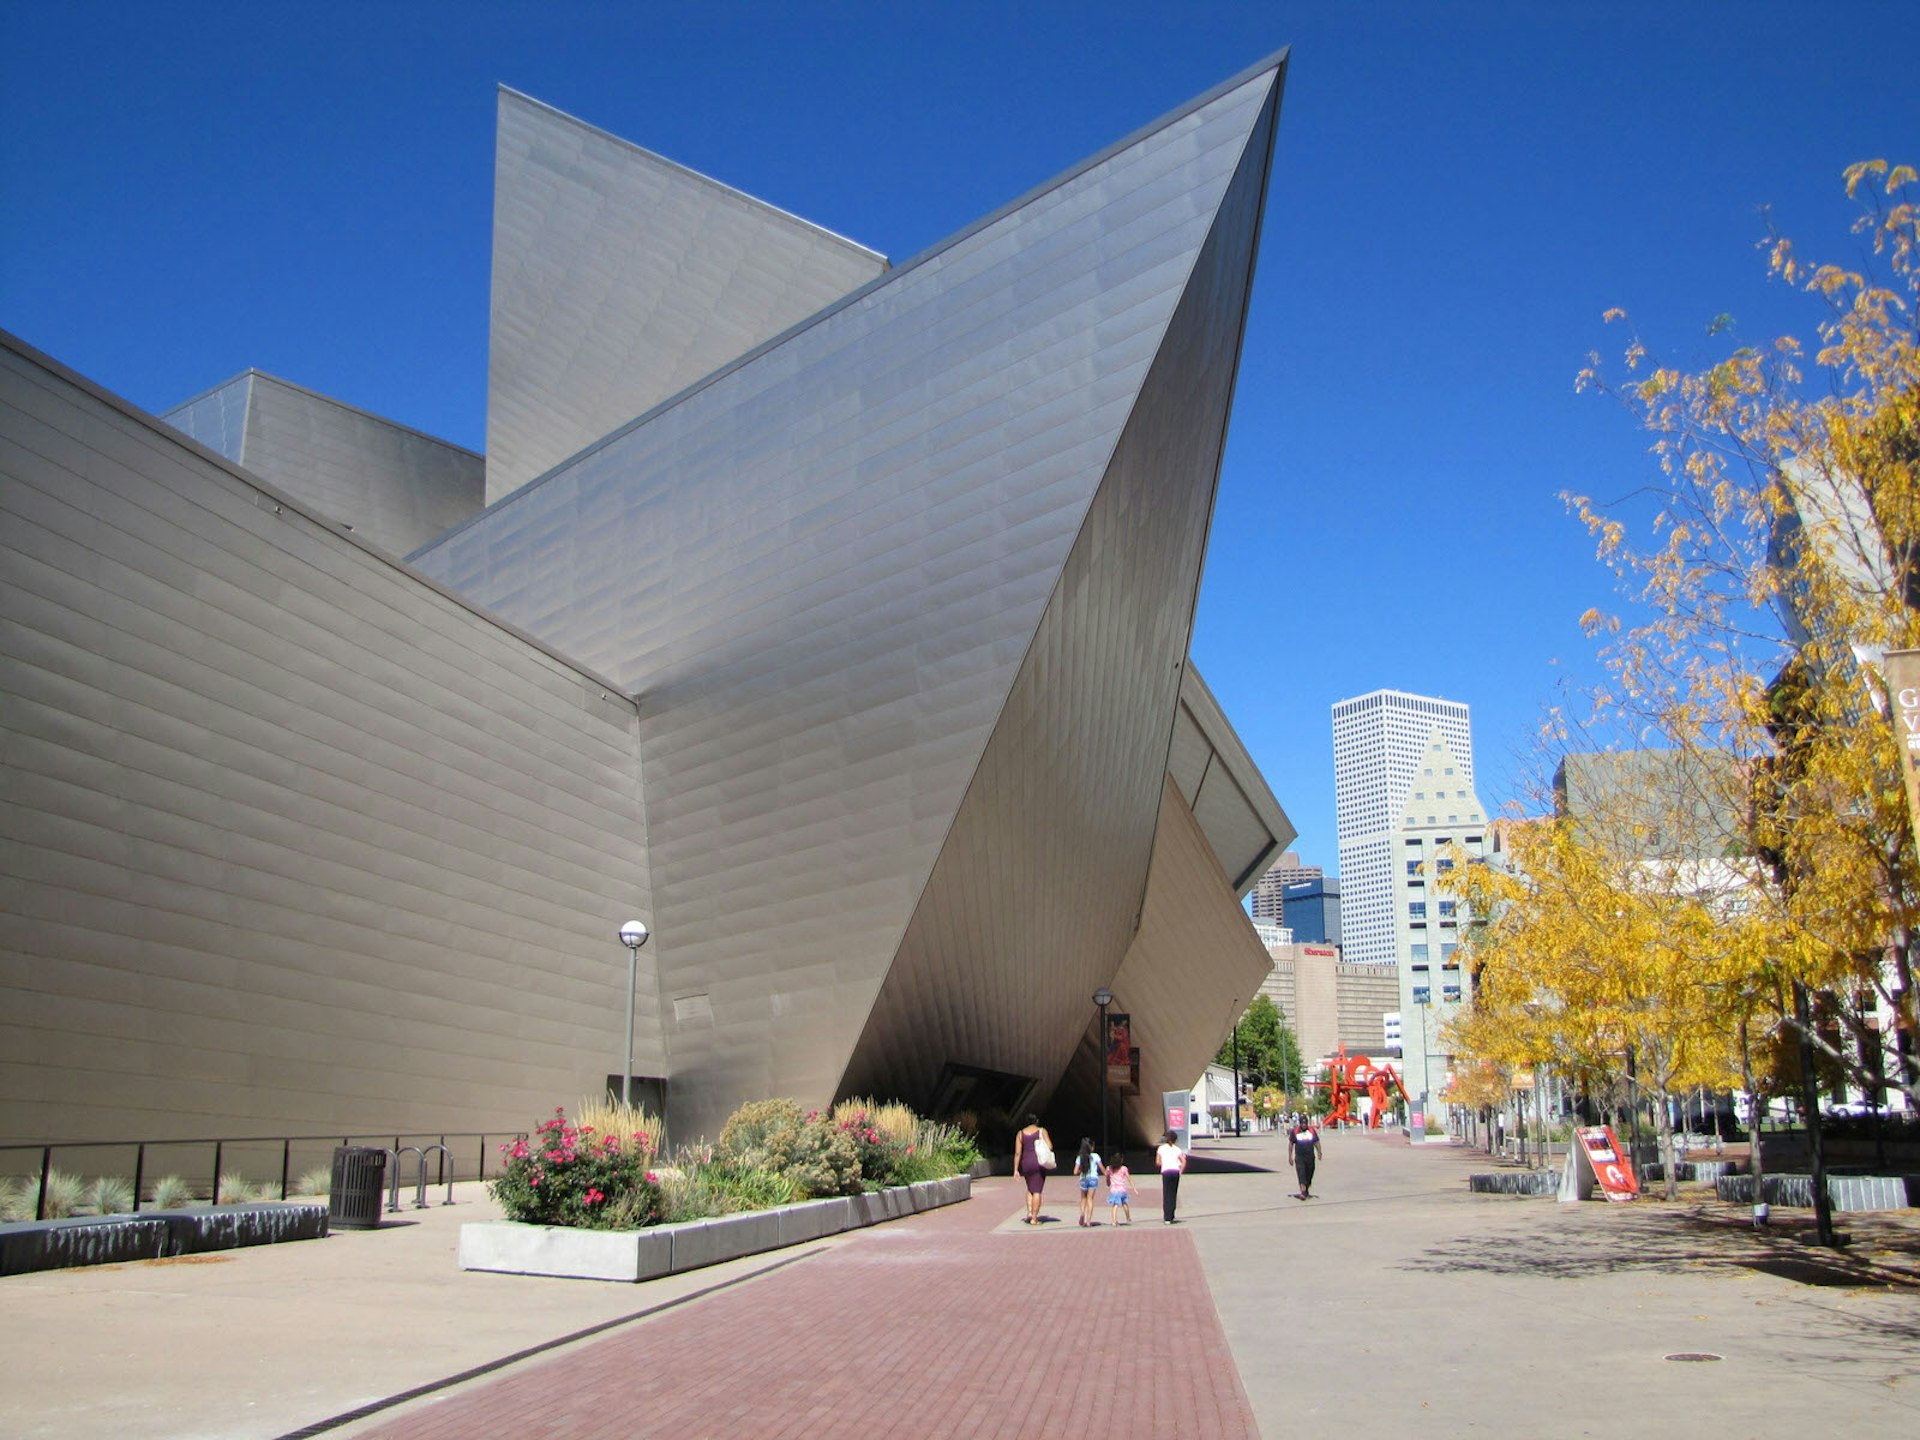 A signature feature of Denver architecture, the Frederic C. Hamilton Building was designed by Daniel Libeskind © Liza Prado / Lonely Planet 